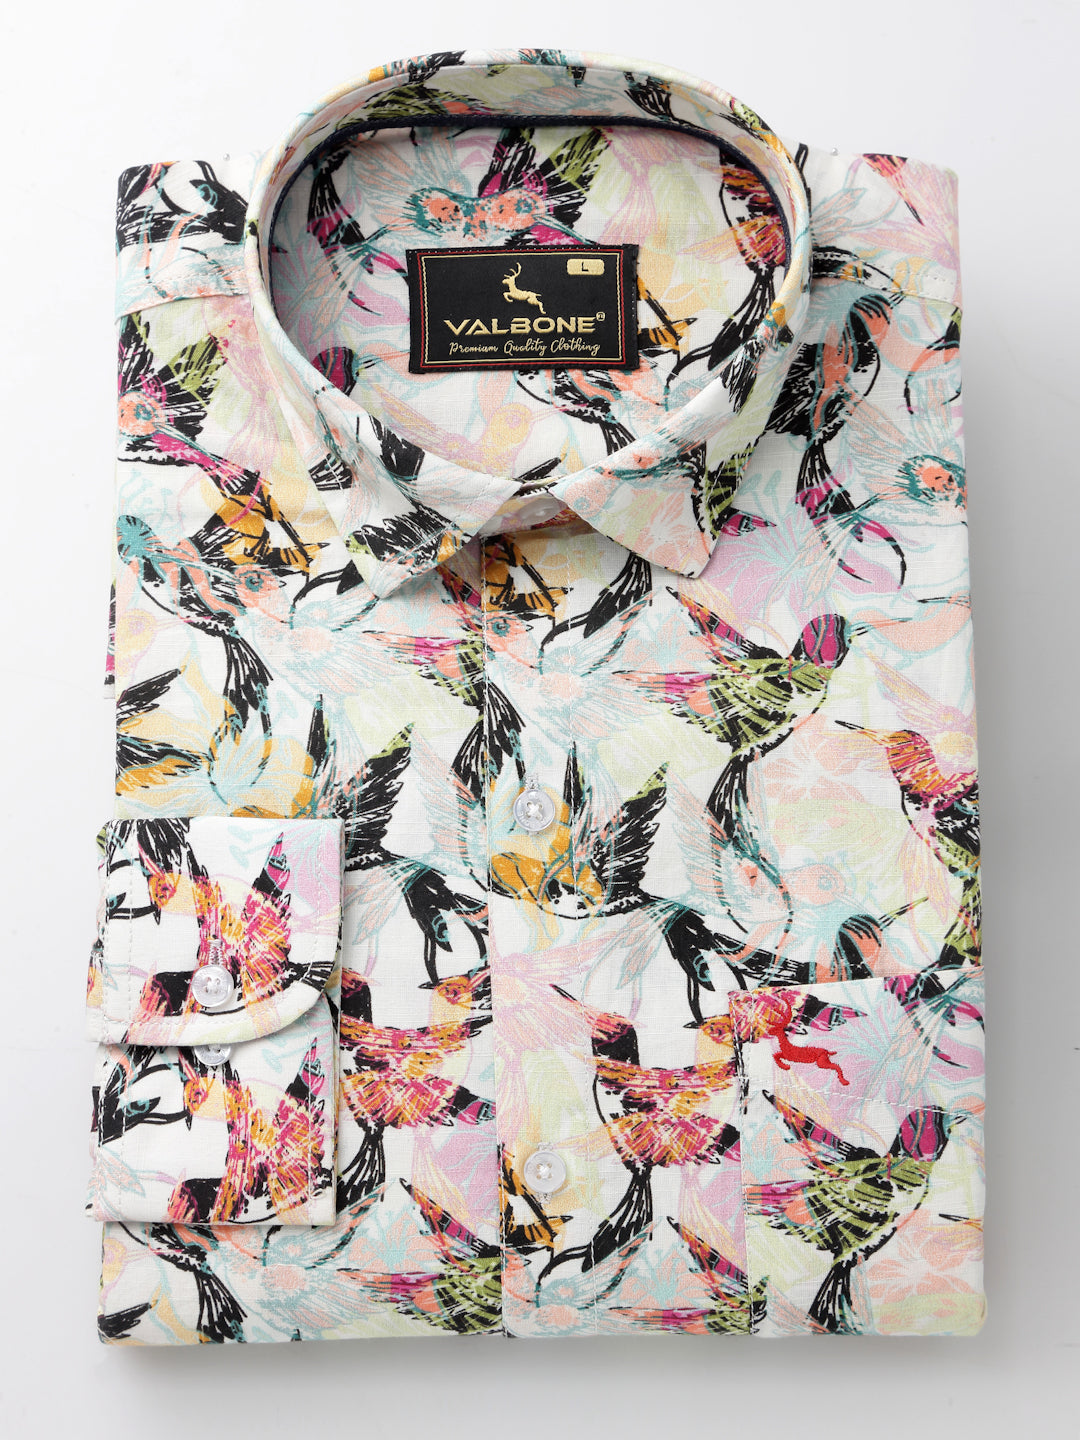 Valbone Men’s Digital Print Birds Printed Regular Fit Casual Shirt Full Sleeves